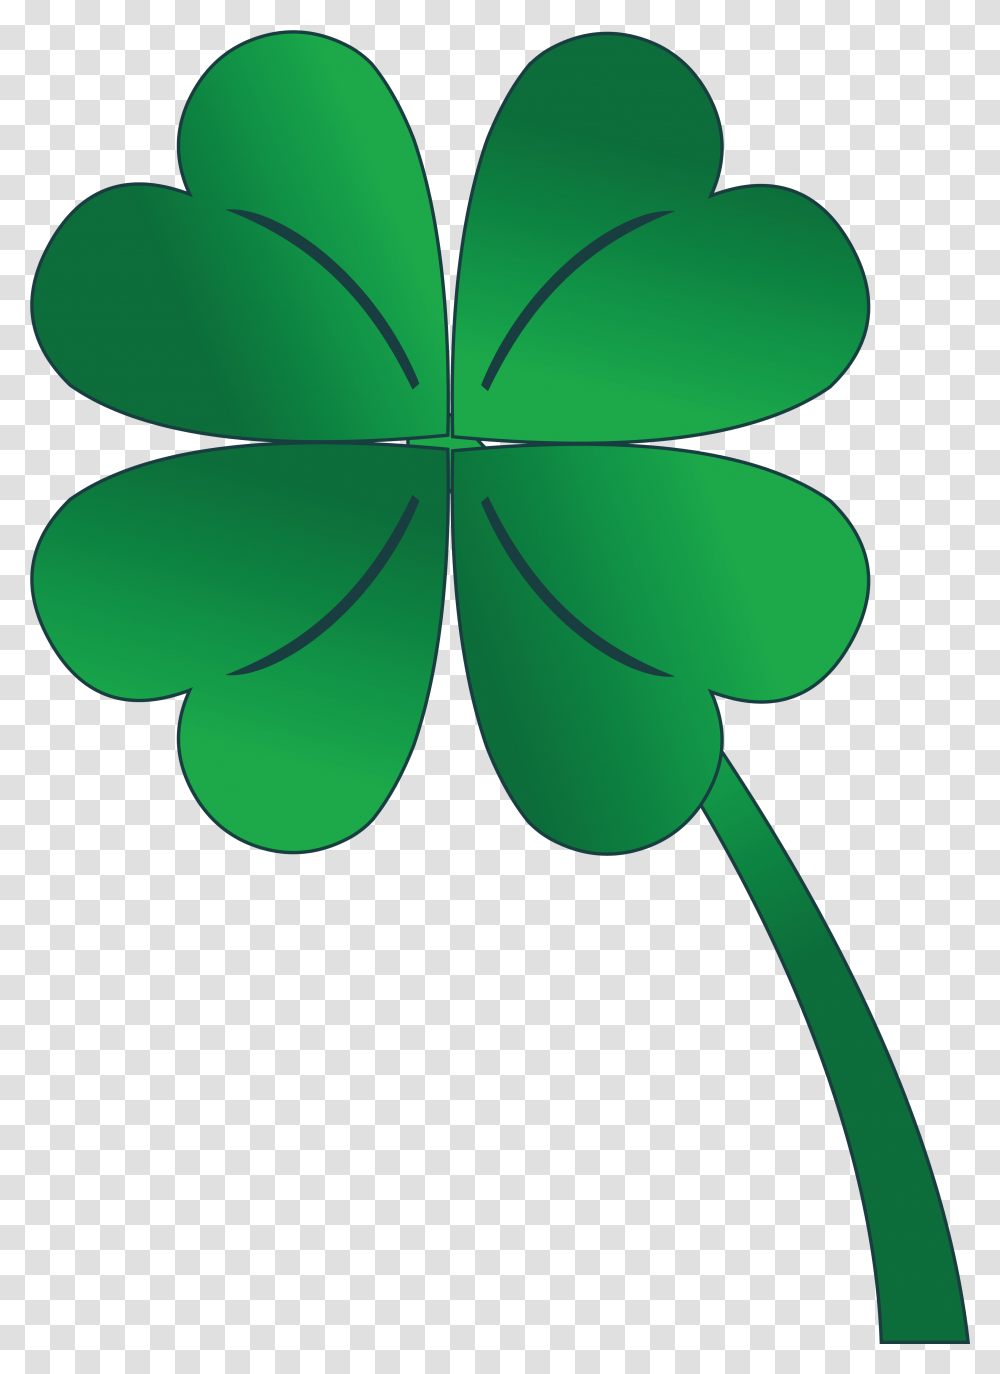 Free Clipart Of A St Paddy's Day 4 Leaf Clover Shamrock Four Leaf Clover Big, Green, Plant, Pattern, Symbol Transparent Png